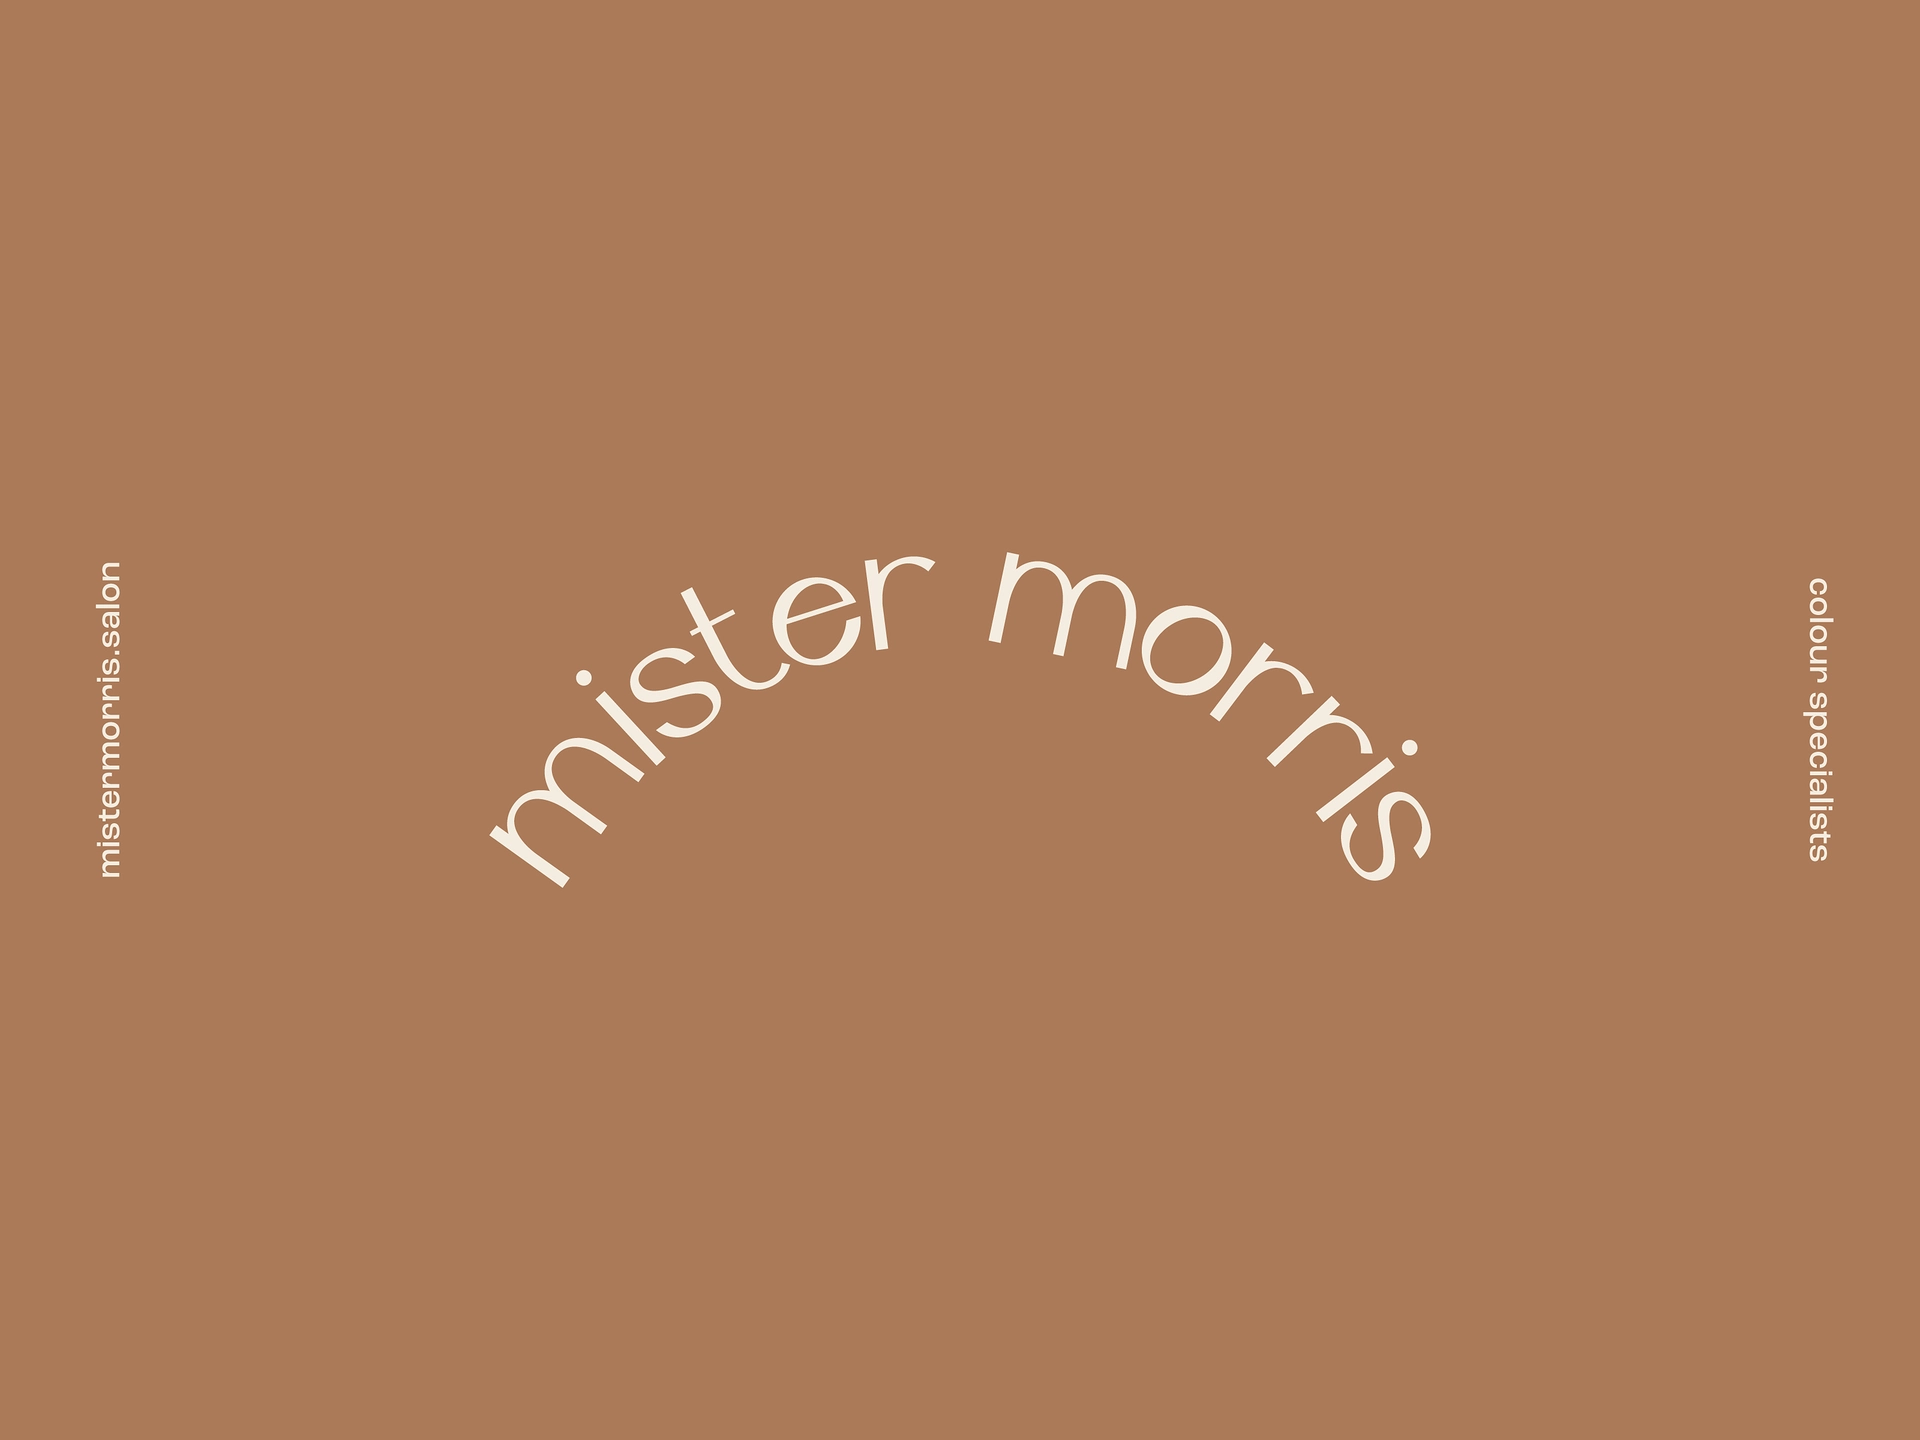 Mister Morris logo arch & website url